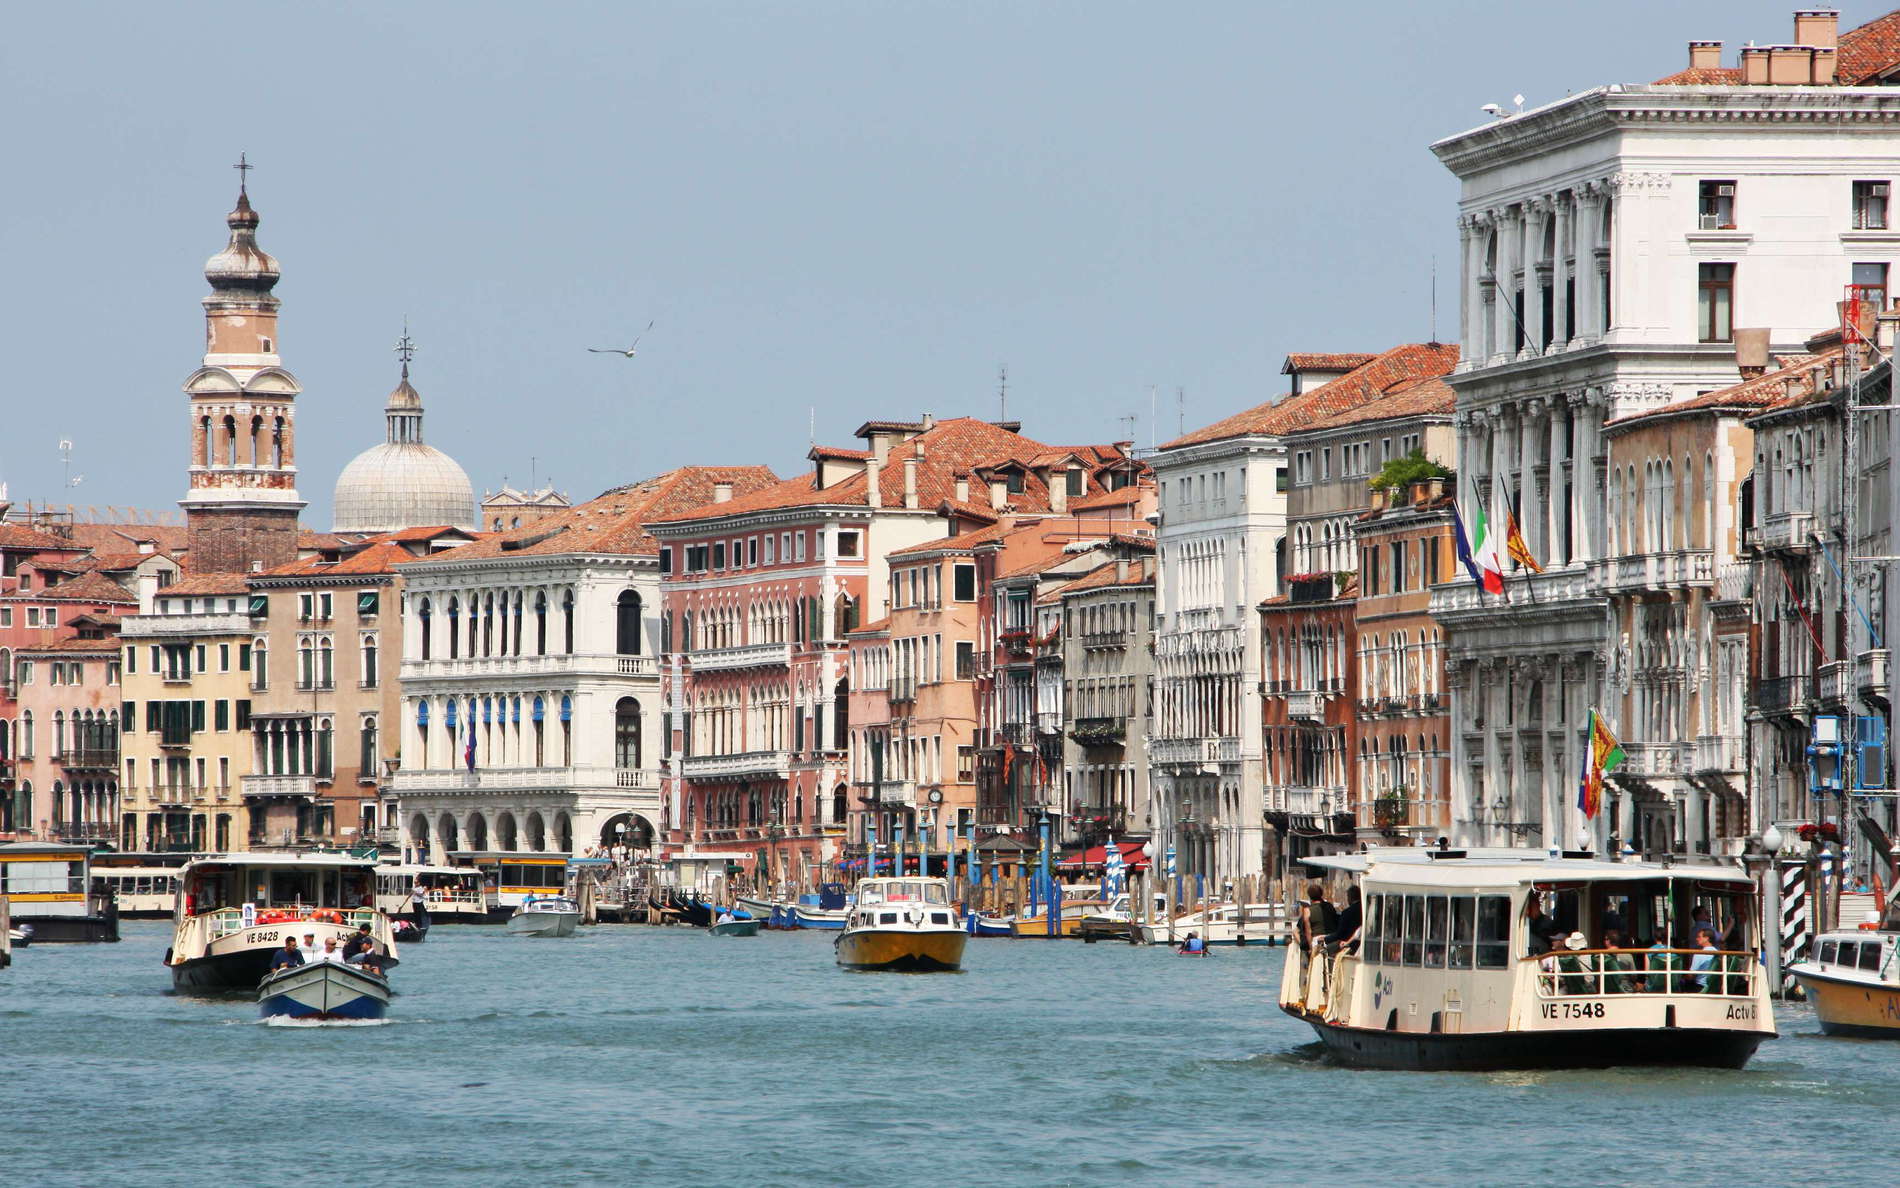 Venezia with Canal Grande